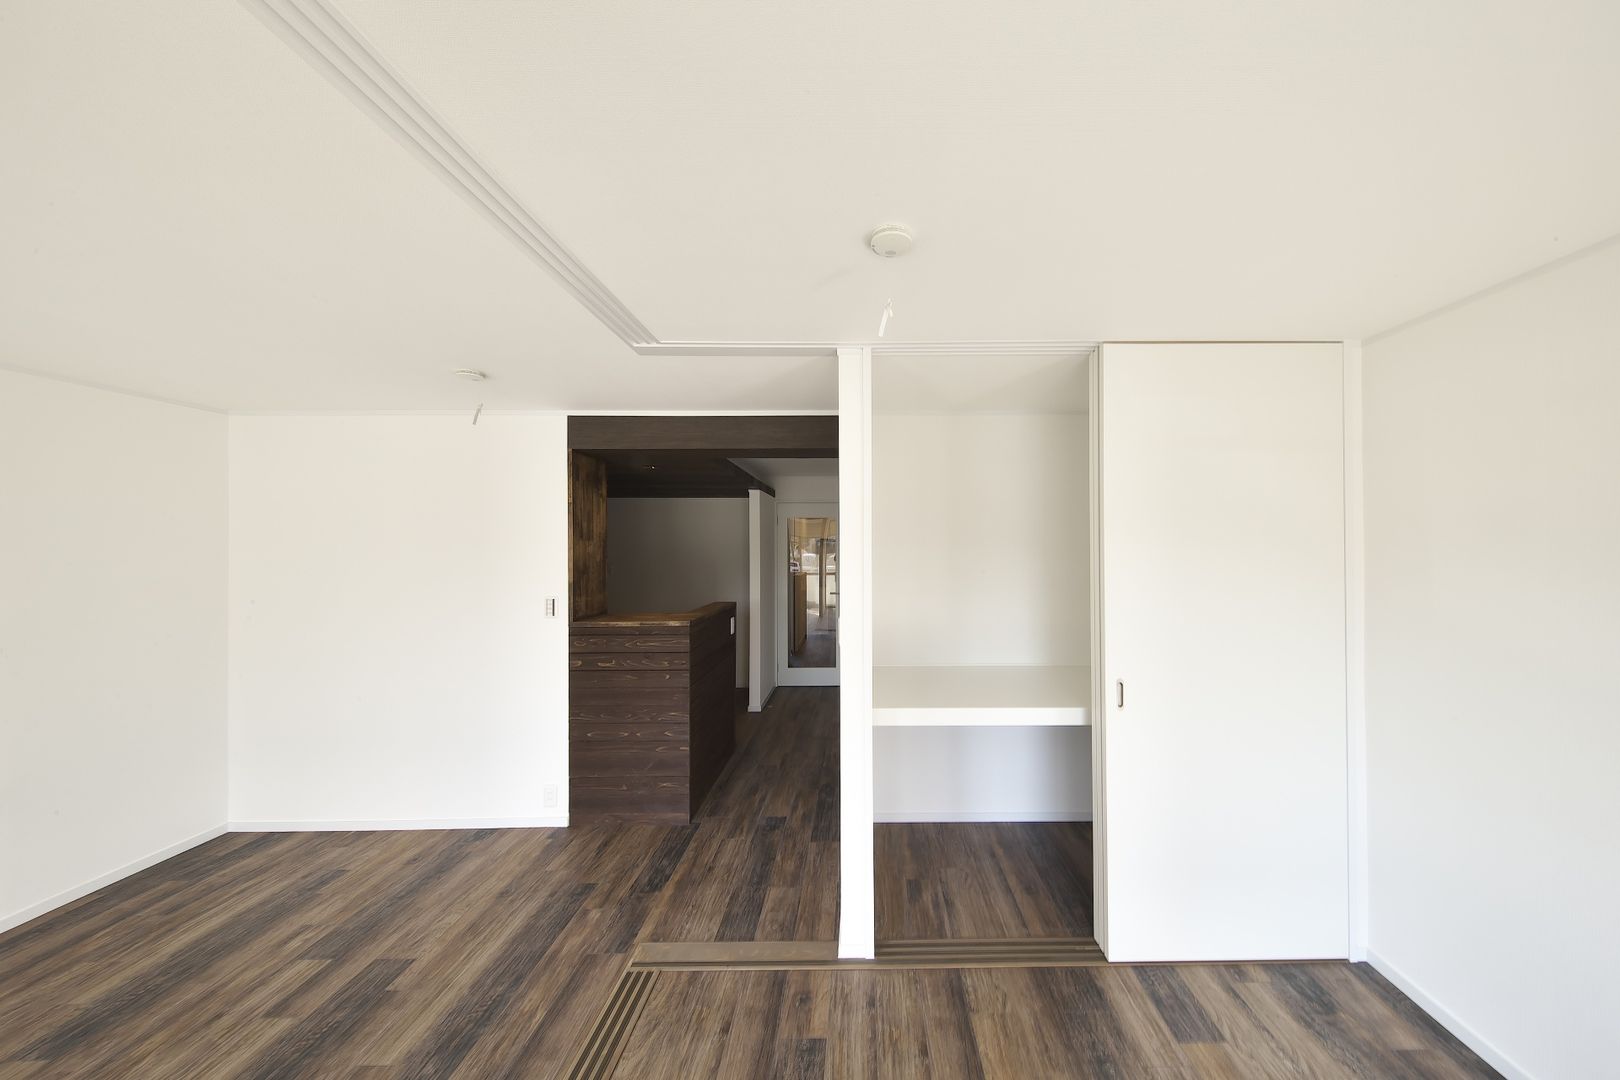 Rental apartment | renovation, FRCHIS,WORKS FRCHIS,WORKS غرفة المعيشة خشب Wood effect